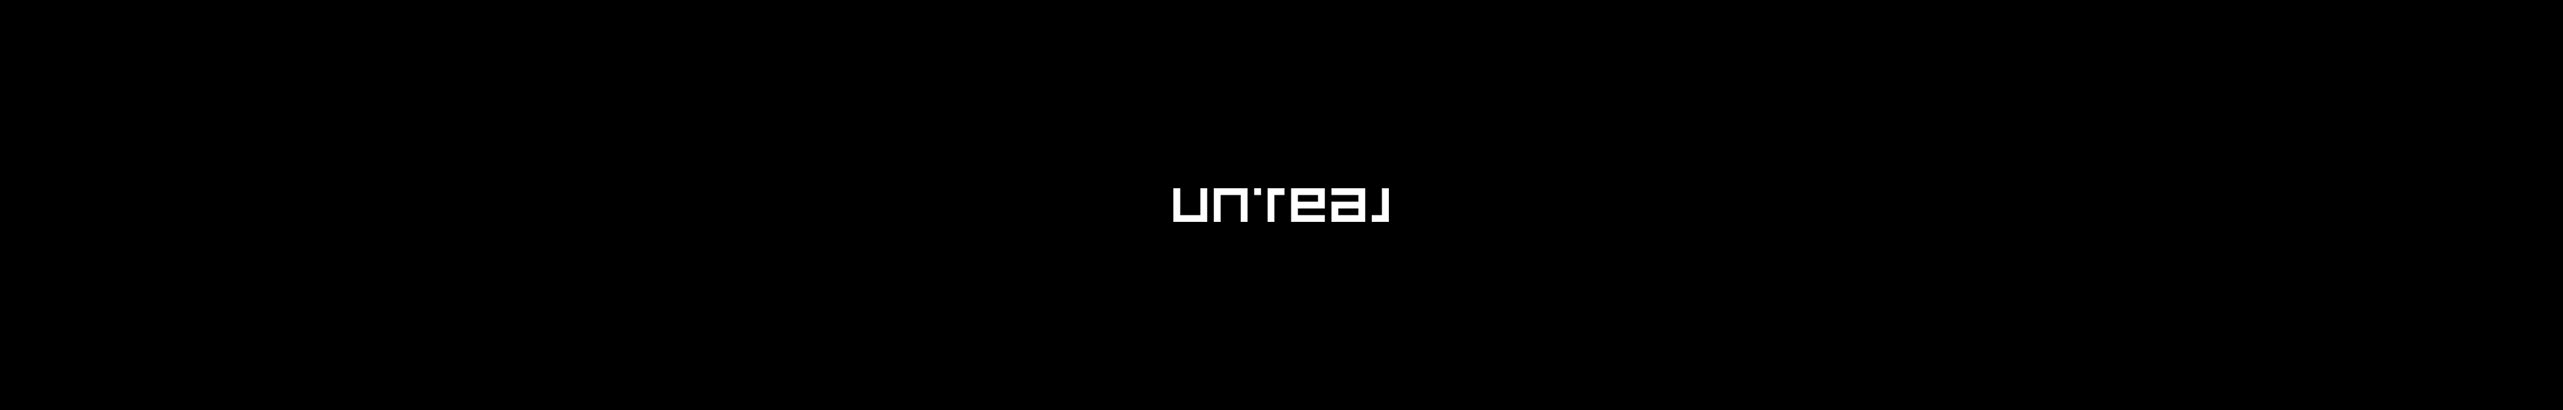 UN-REAL 3D's profile banner